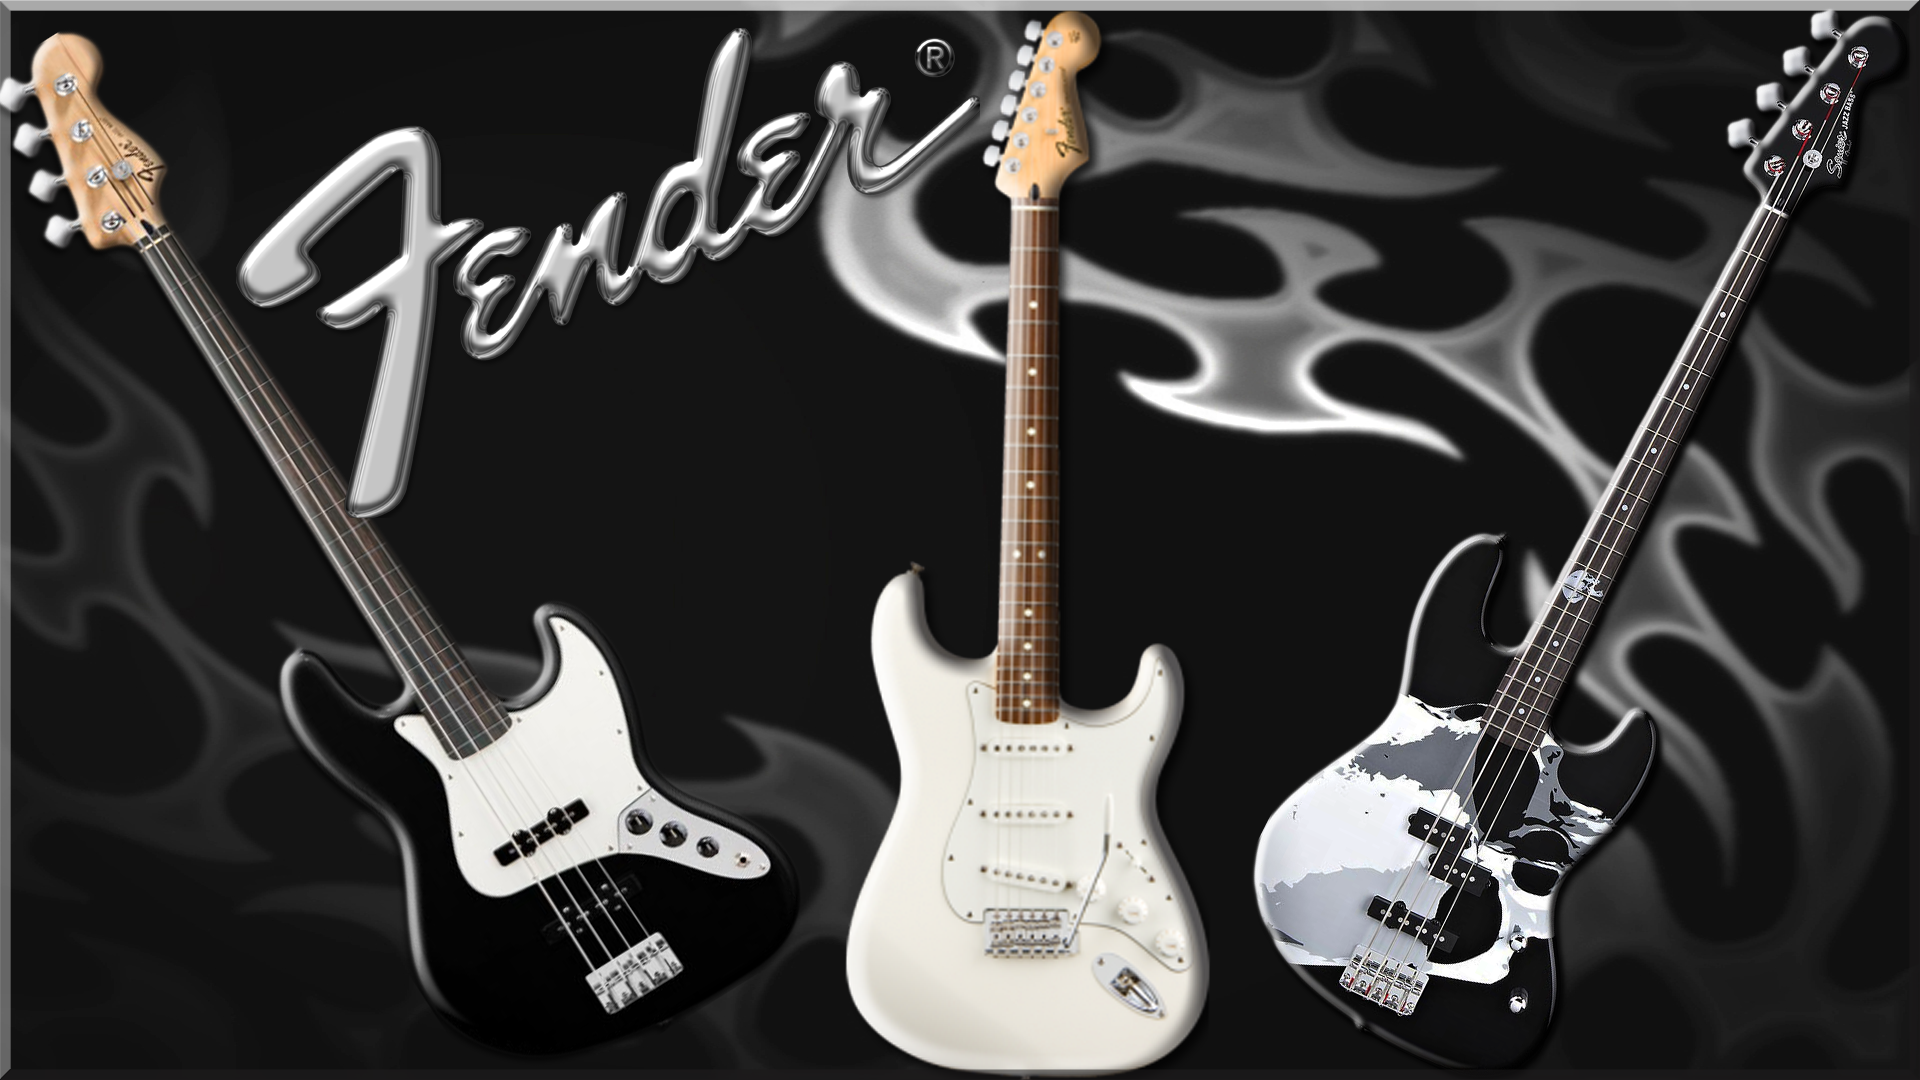 48 Fender Guitar Wallpaper For Computer On Wallpapersafari